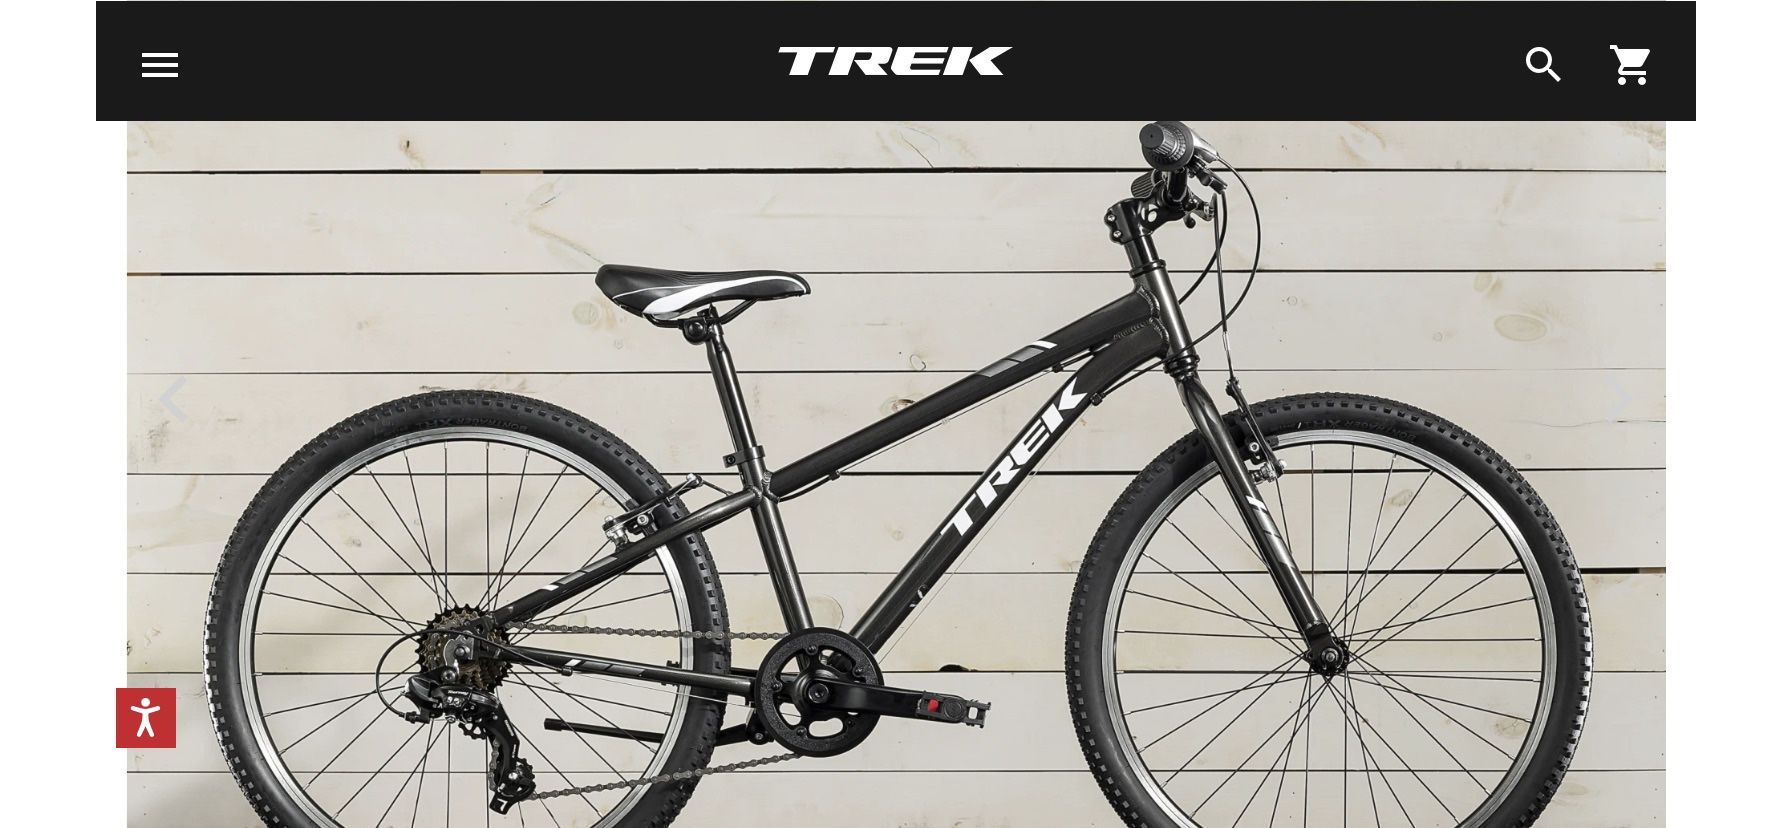 Trek Young Adult Bike - Like New.  Best Offer